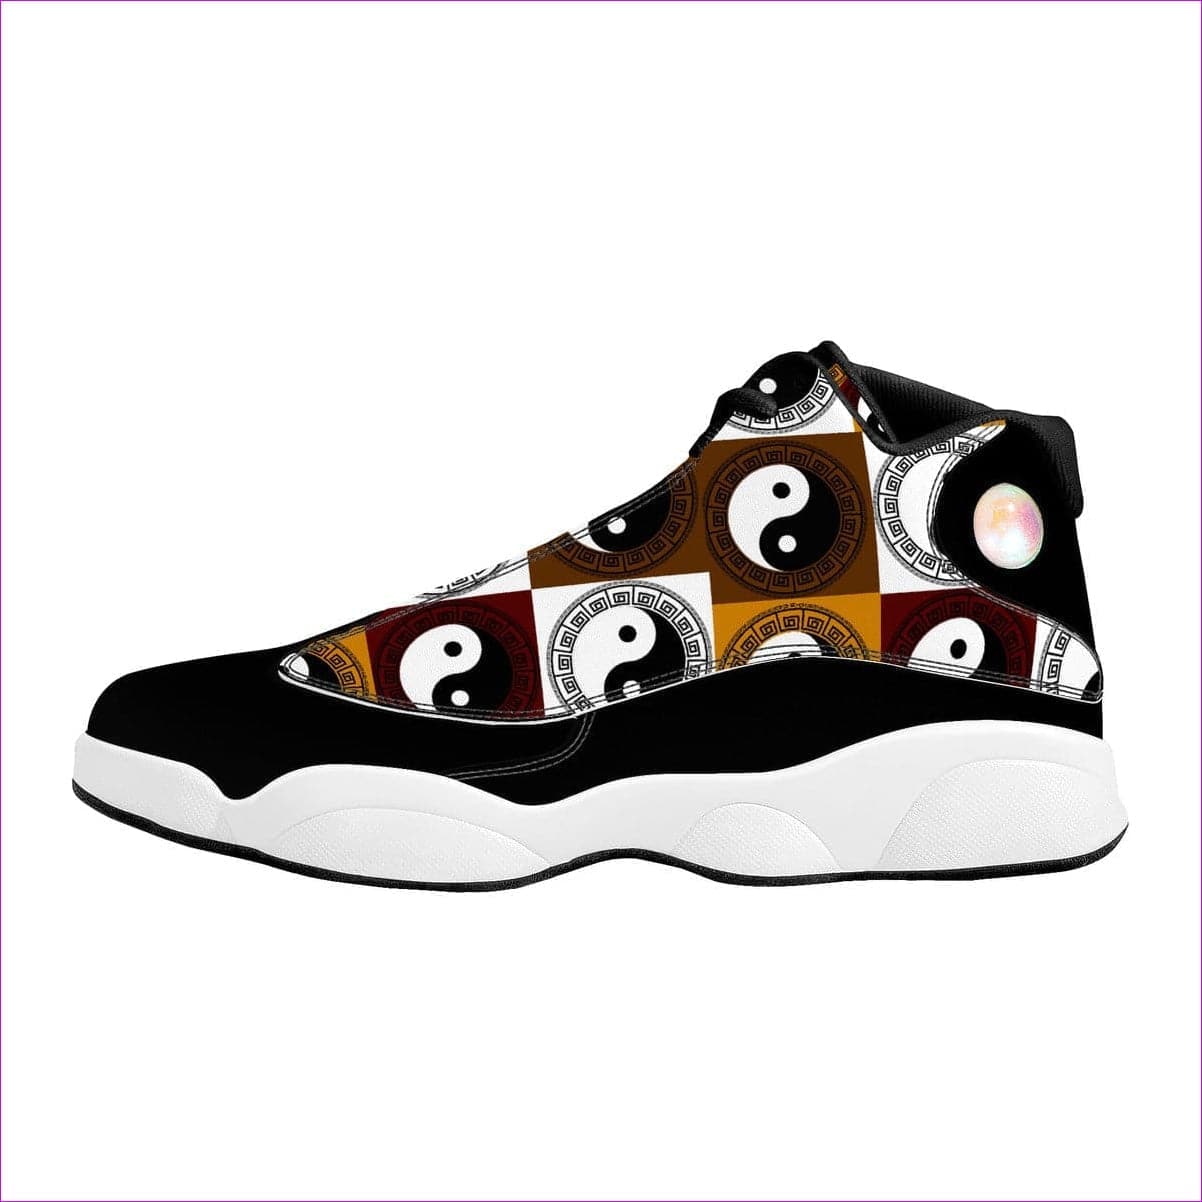 Yin & Yang Basketball Shoes - unisex basketball shoes at TFC&H Co.